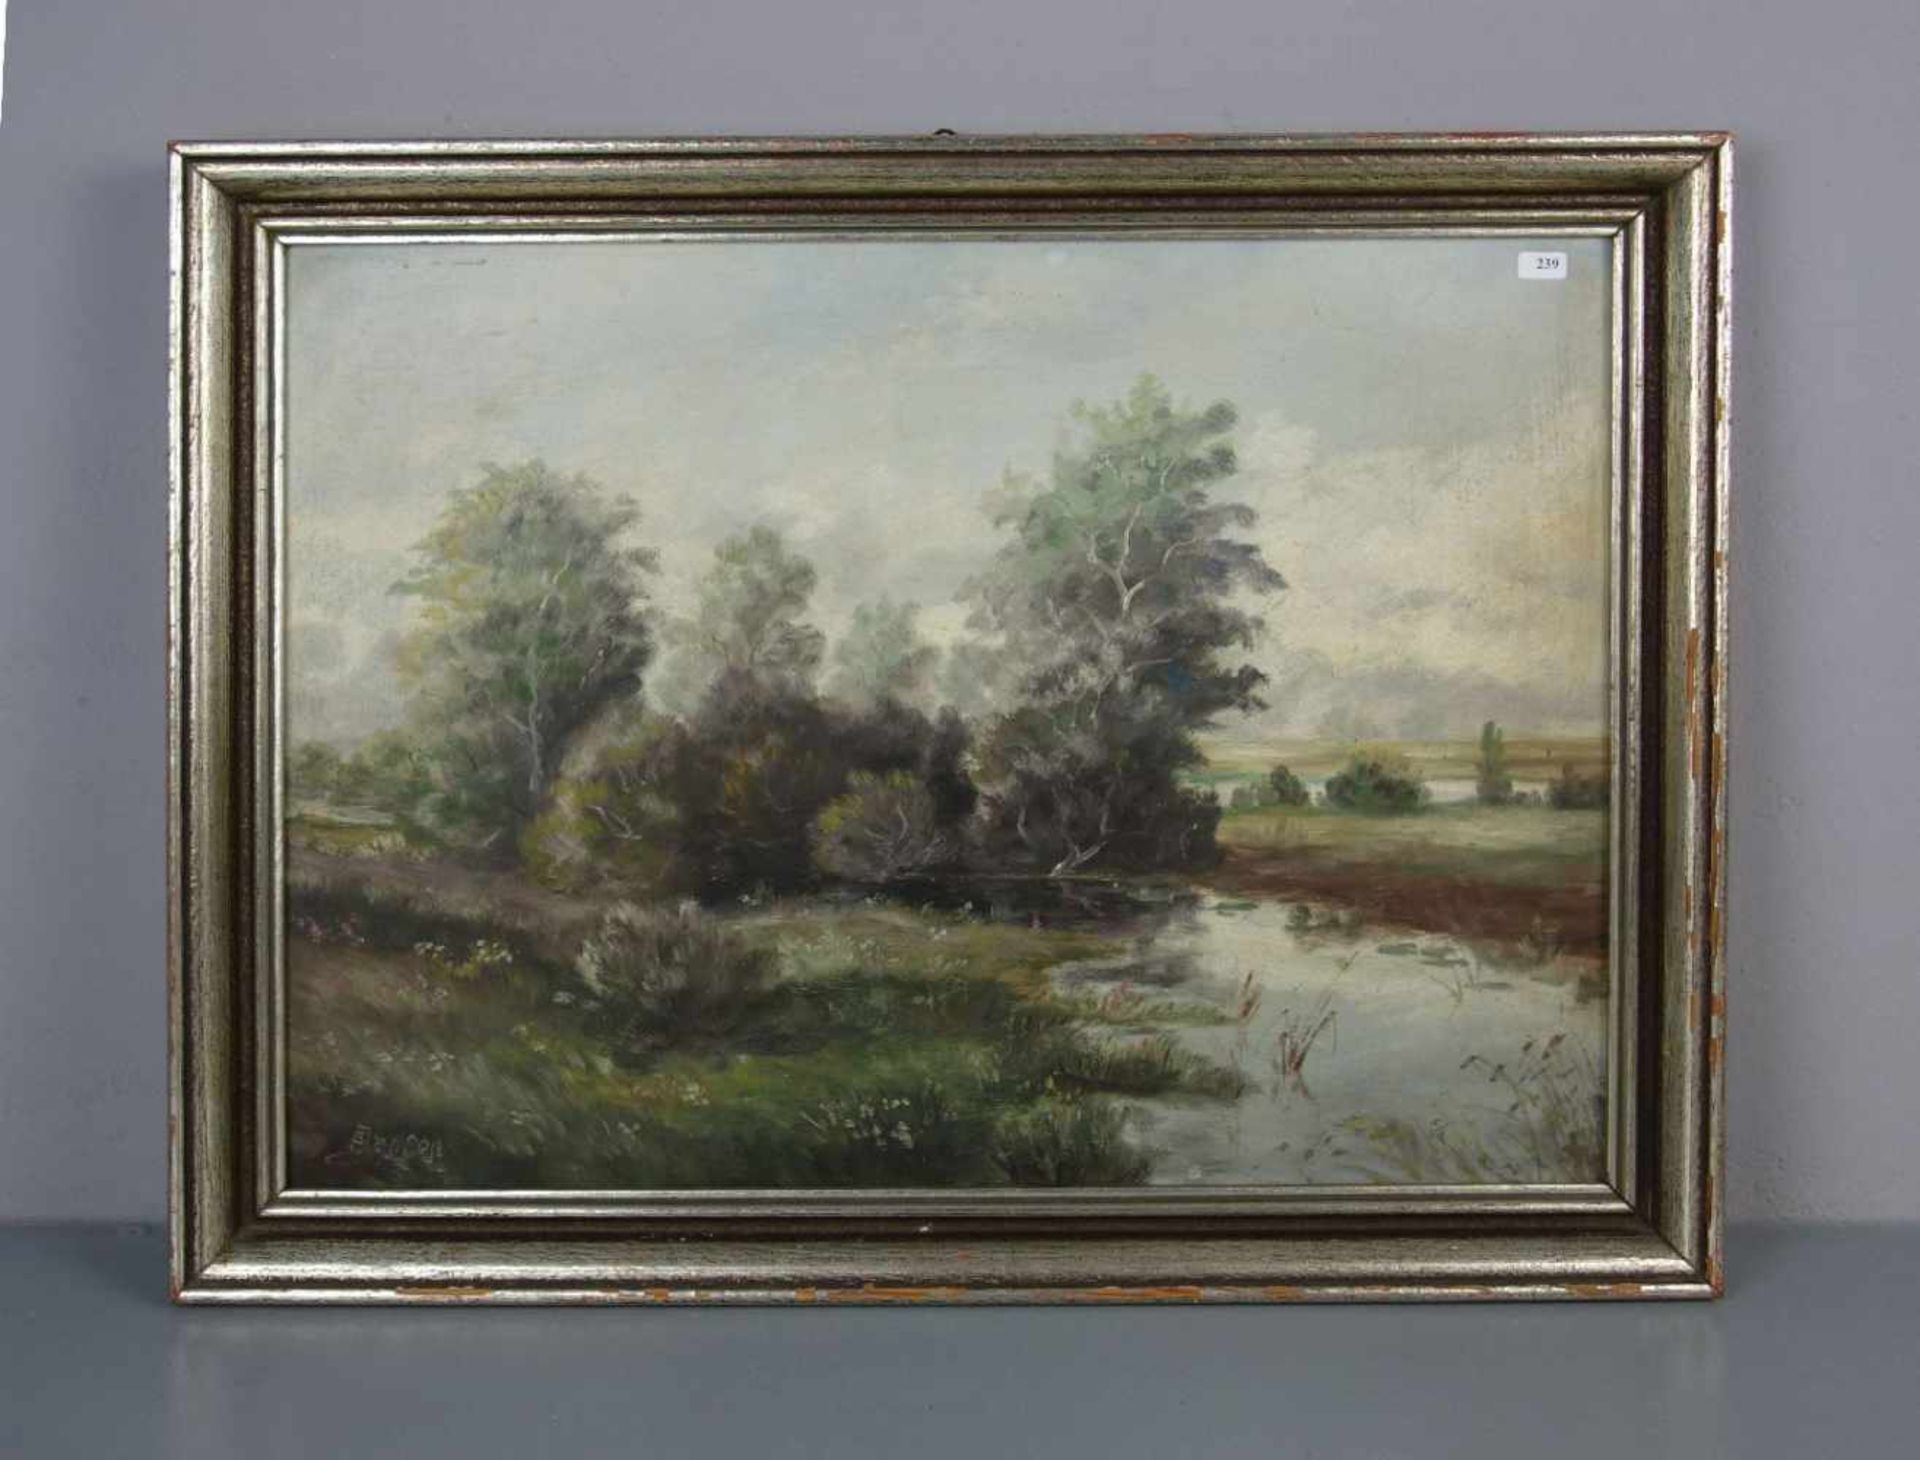 JANSSEN, H. (19./20. Jh.), Gemälde / painting: "Moorlandschaft", Öl auf Platte / oil on artist's